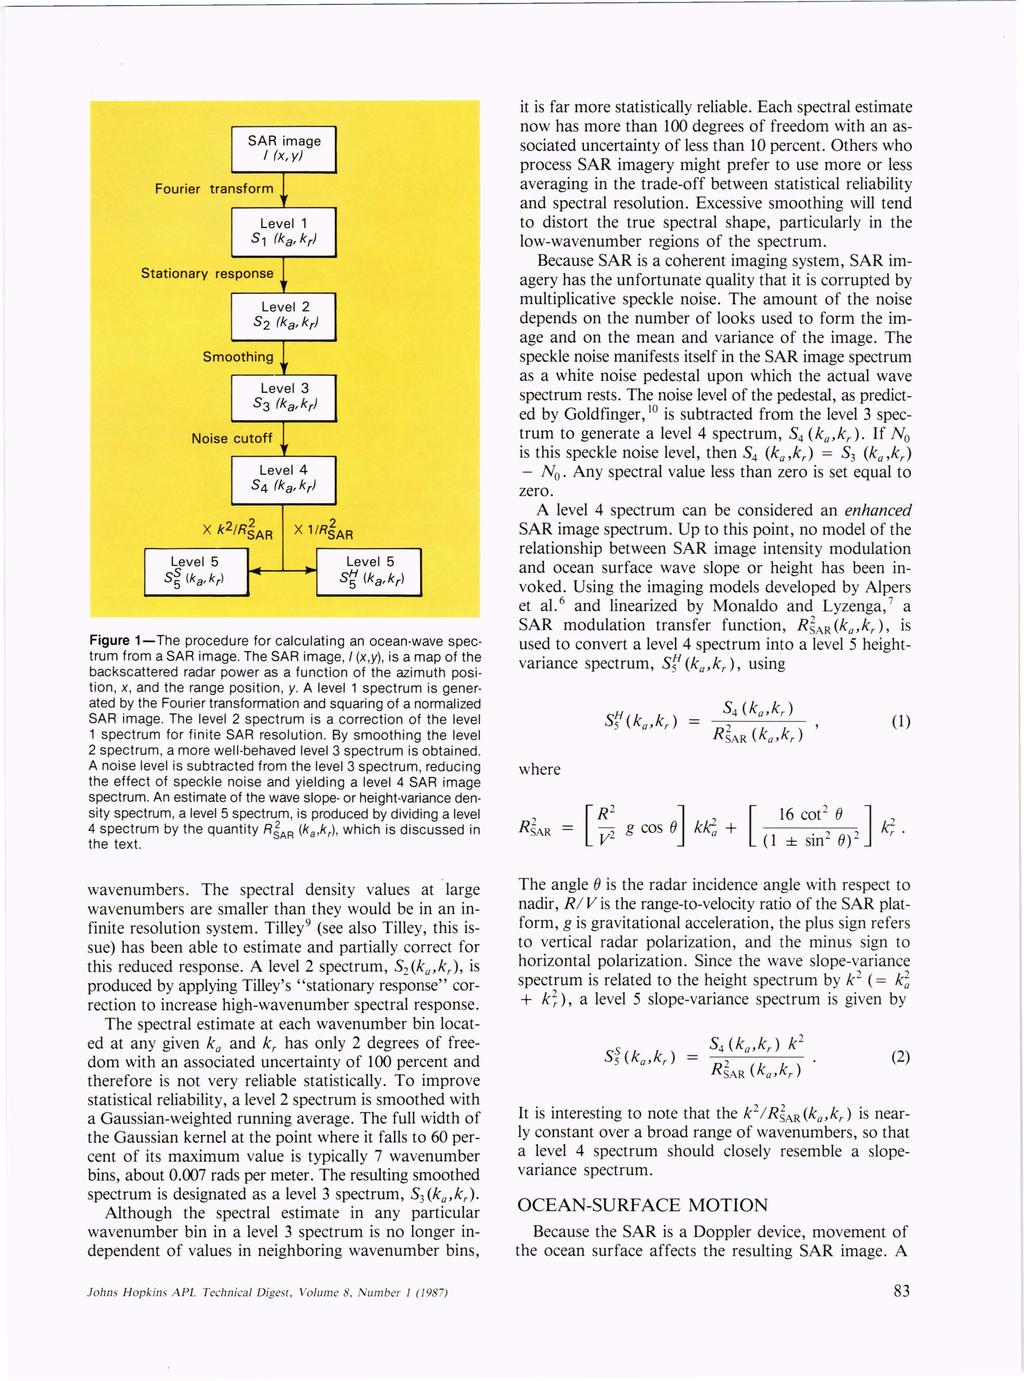 Fourier Level 5 S~ (ka,krl 2 X 11RSAR Level 5 S~ (ka,kr ) Figure 1-The procedure for calculating an ocean-wave spectrum from a SAR image.